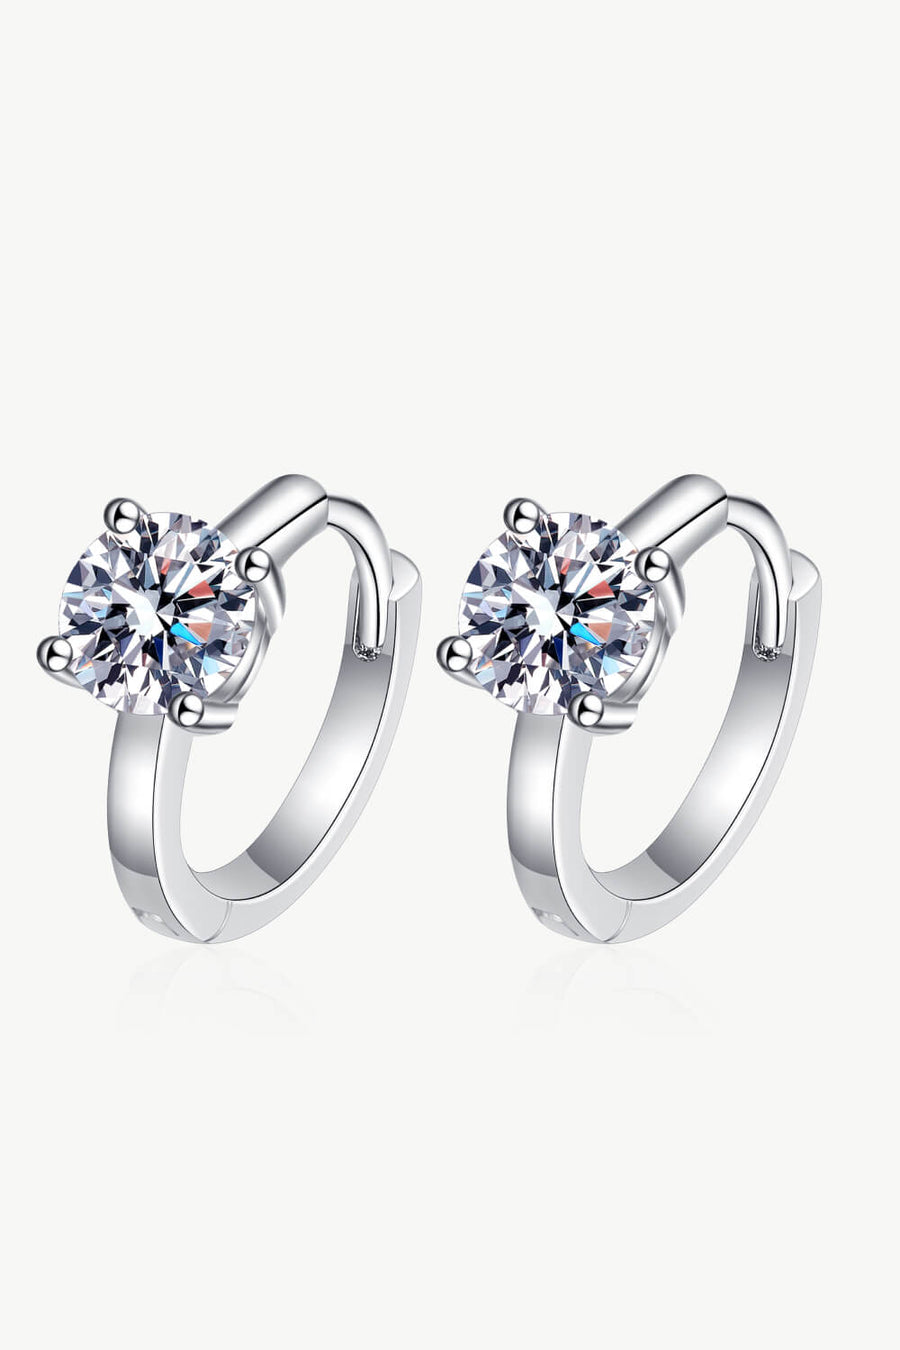 1# BEST Diamond Hoop Earrings Jewelry Gifts for Women | #1 Best Most Top Trendy Trending 1 Carat Diamond Huggie Earrings Gift for Women, Ladies | MASON New York